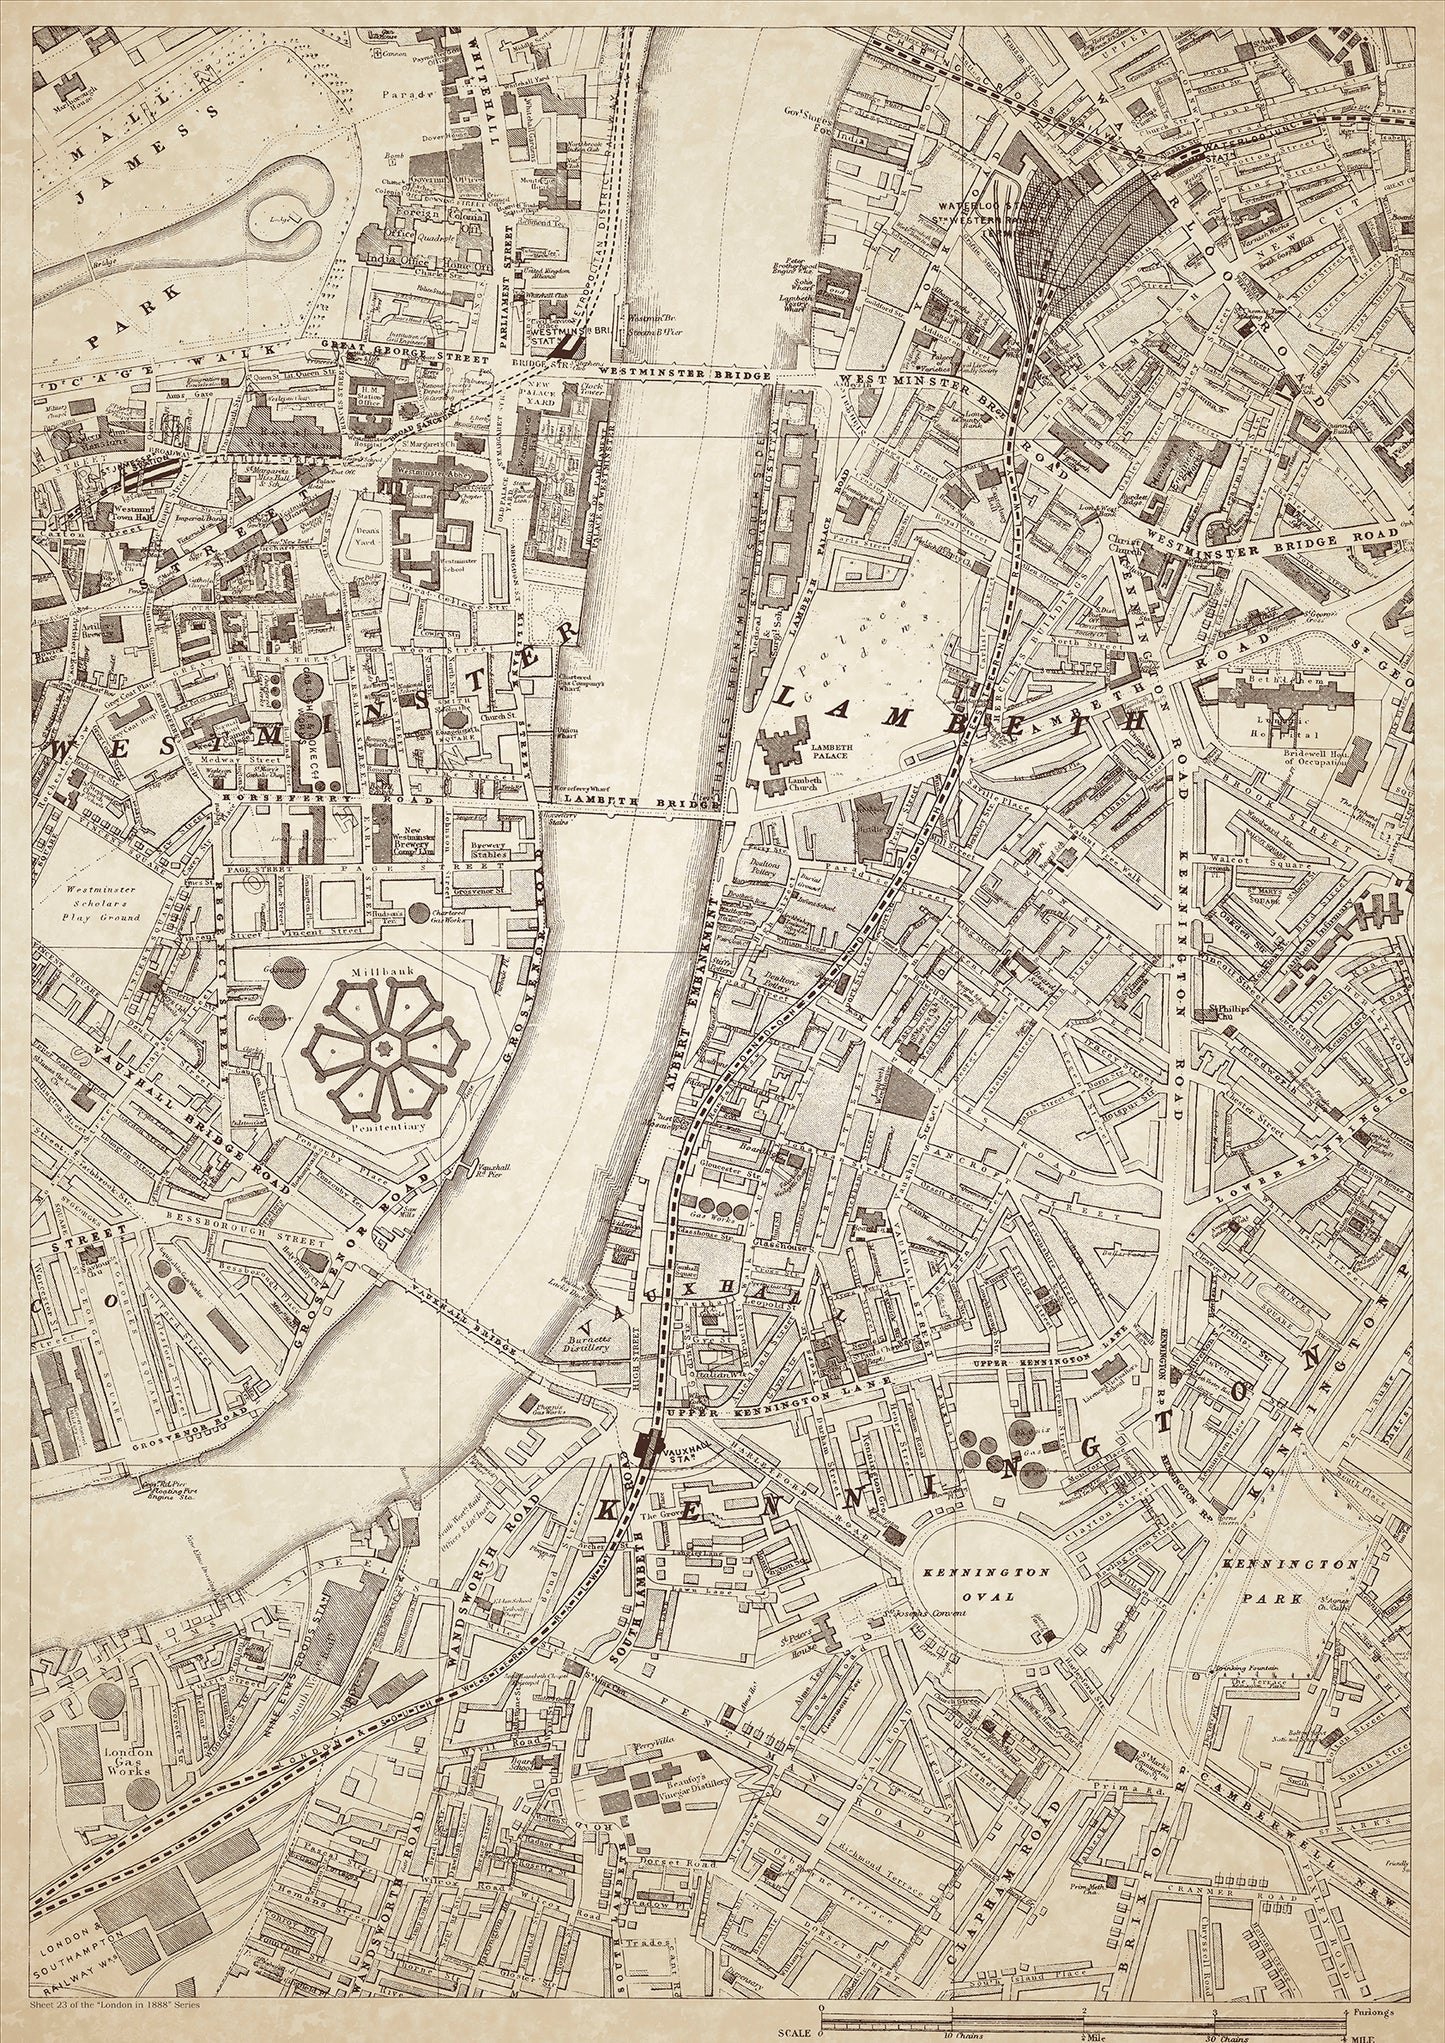 London in 1888 Series - showing Westminster, Lambeth, Kennington, Vauxhall - sheet 23